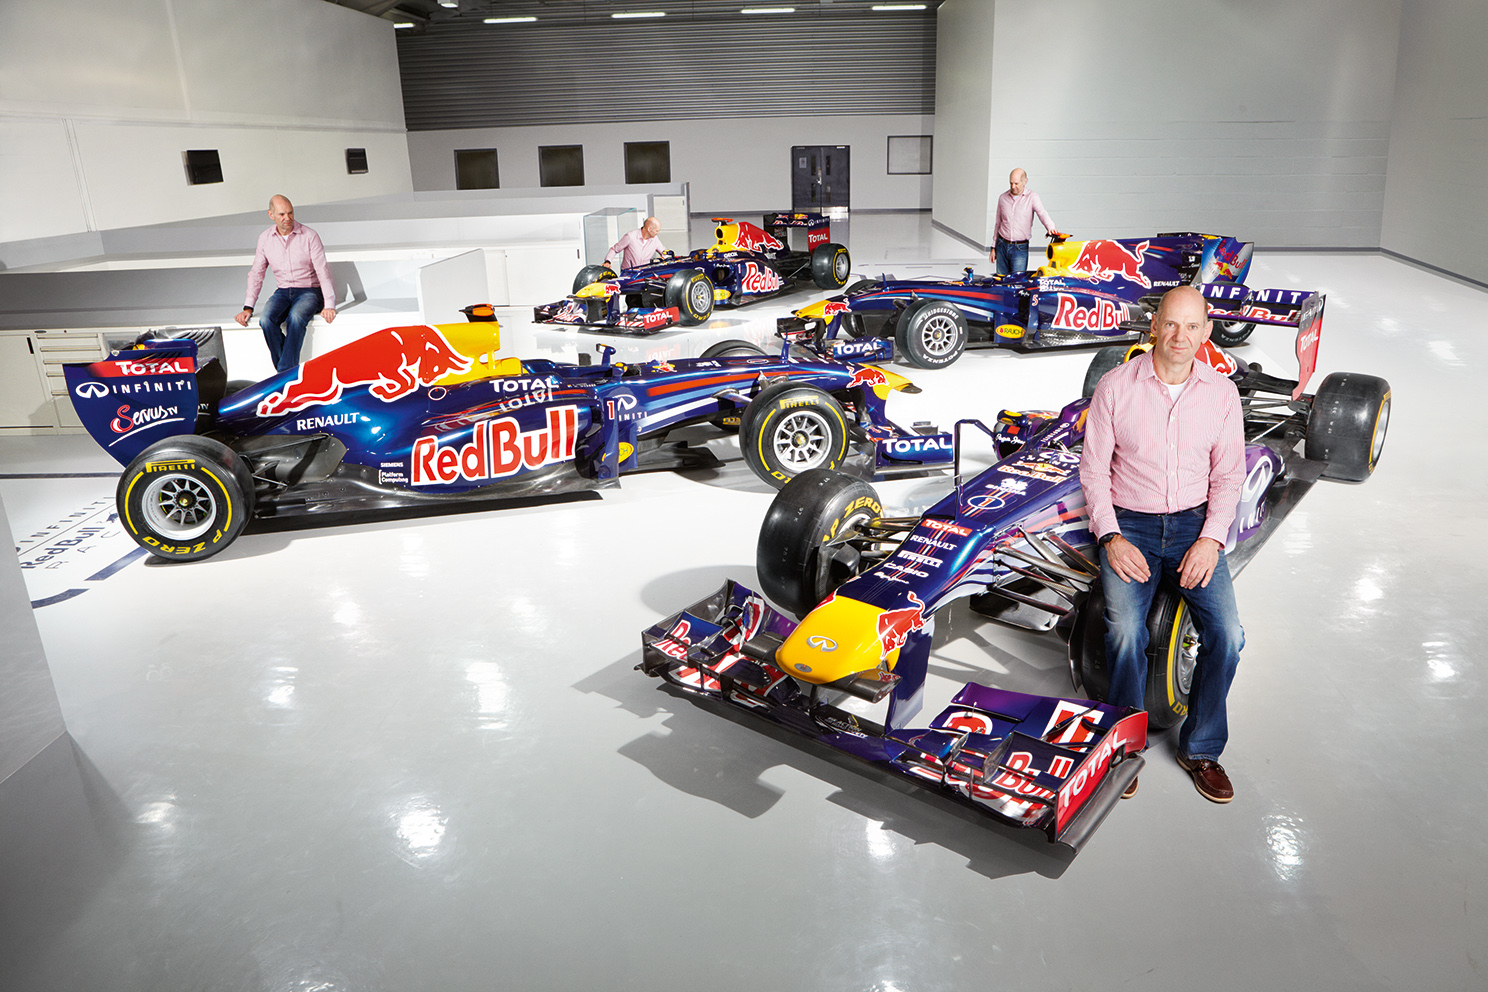 Red Bull Racing's Adrian Newey